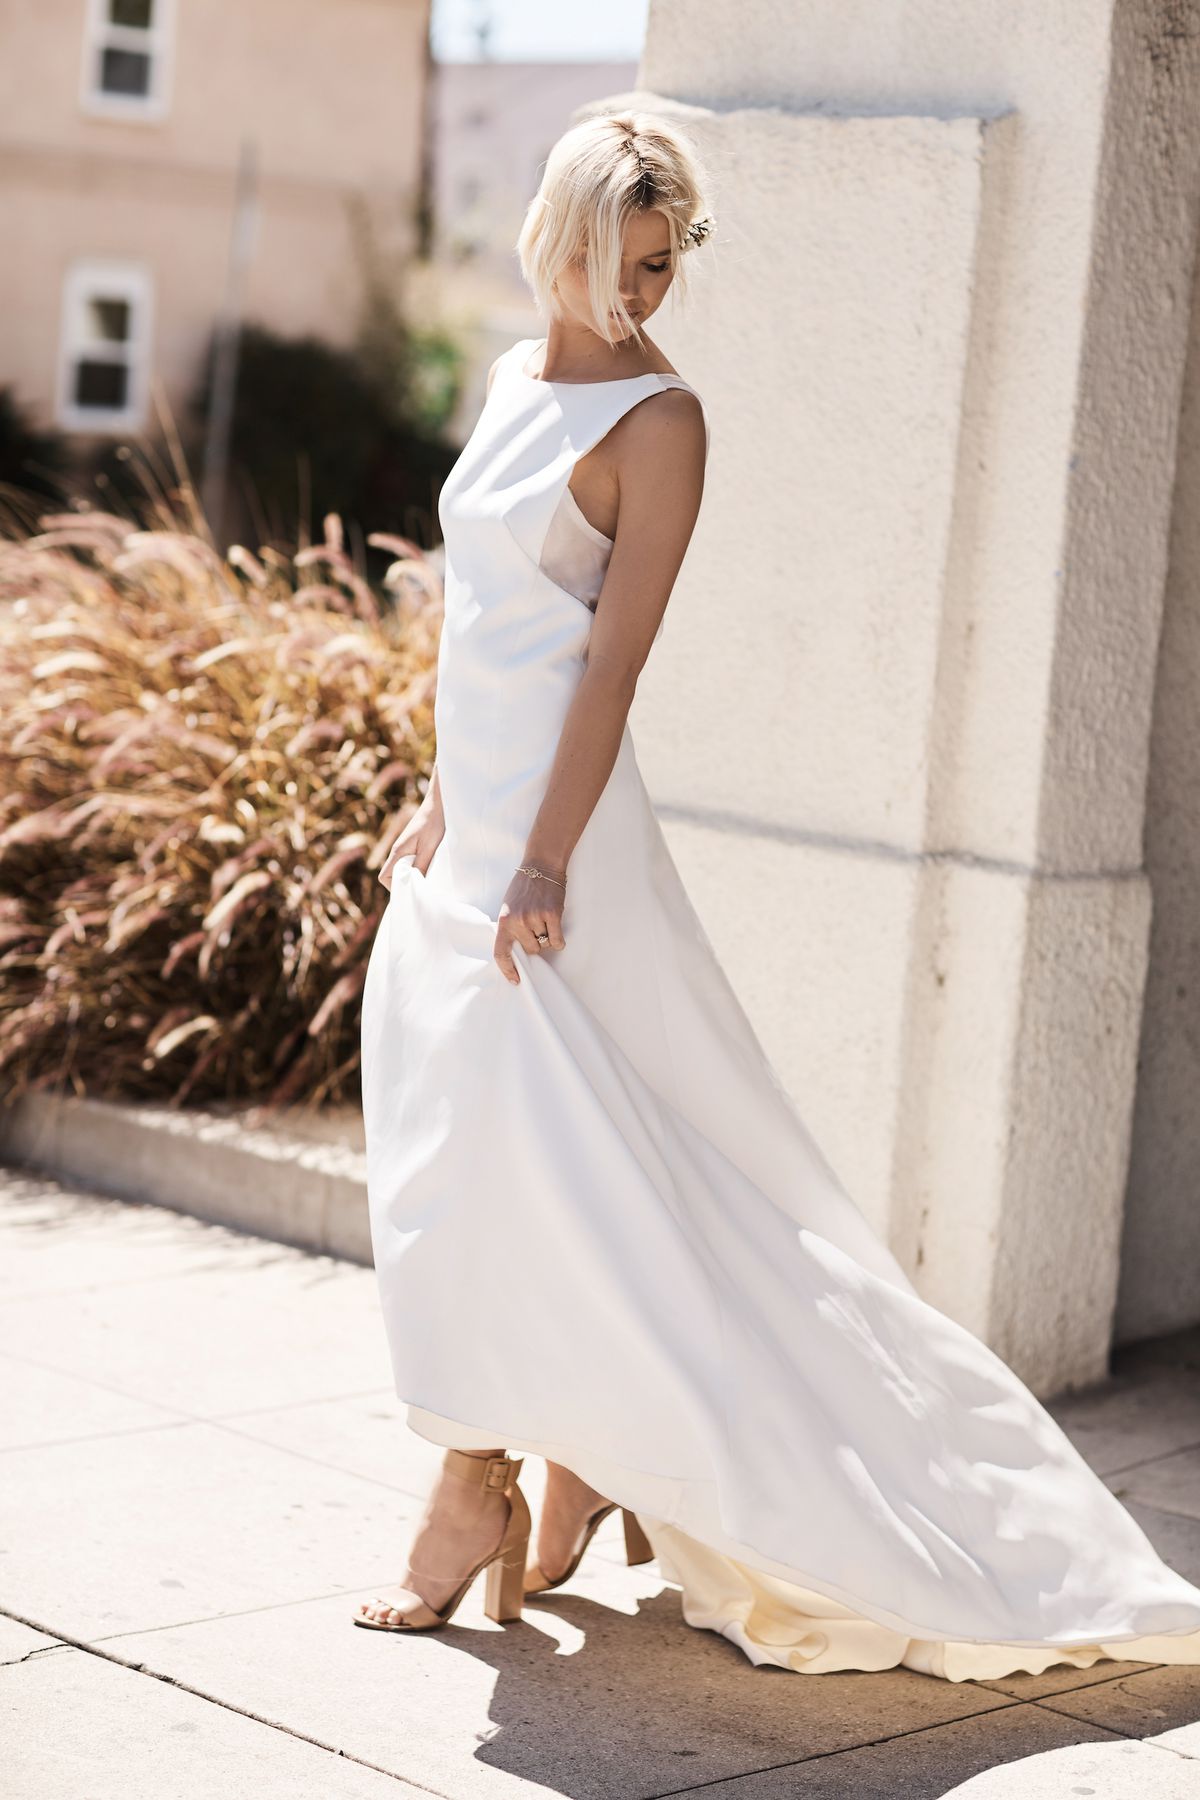 A model wearing a Floravere wedding dress